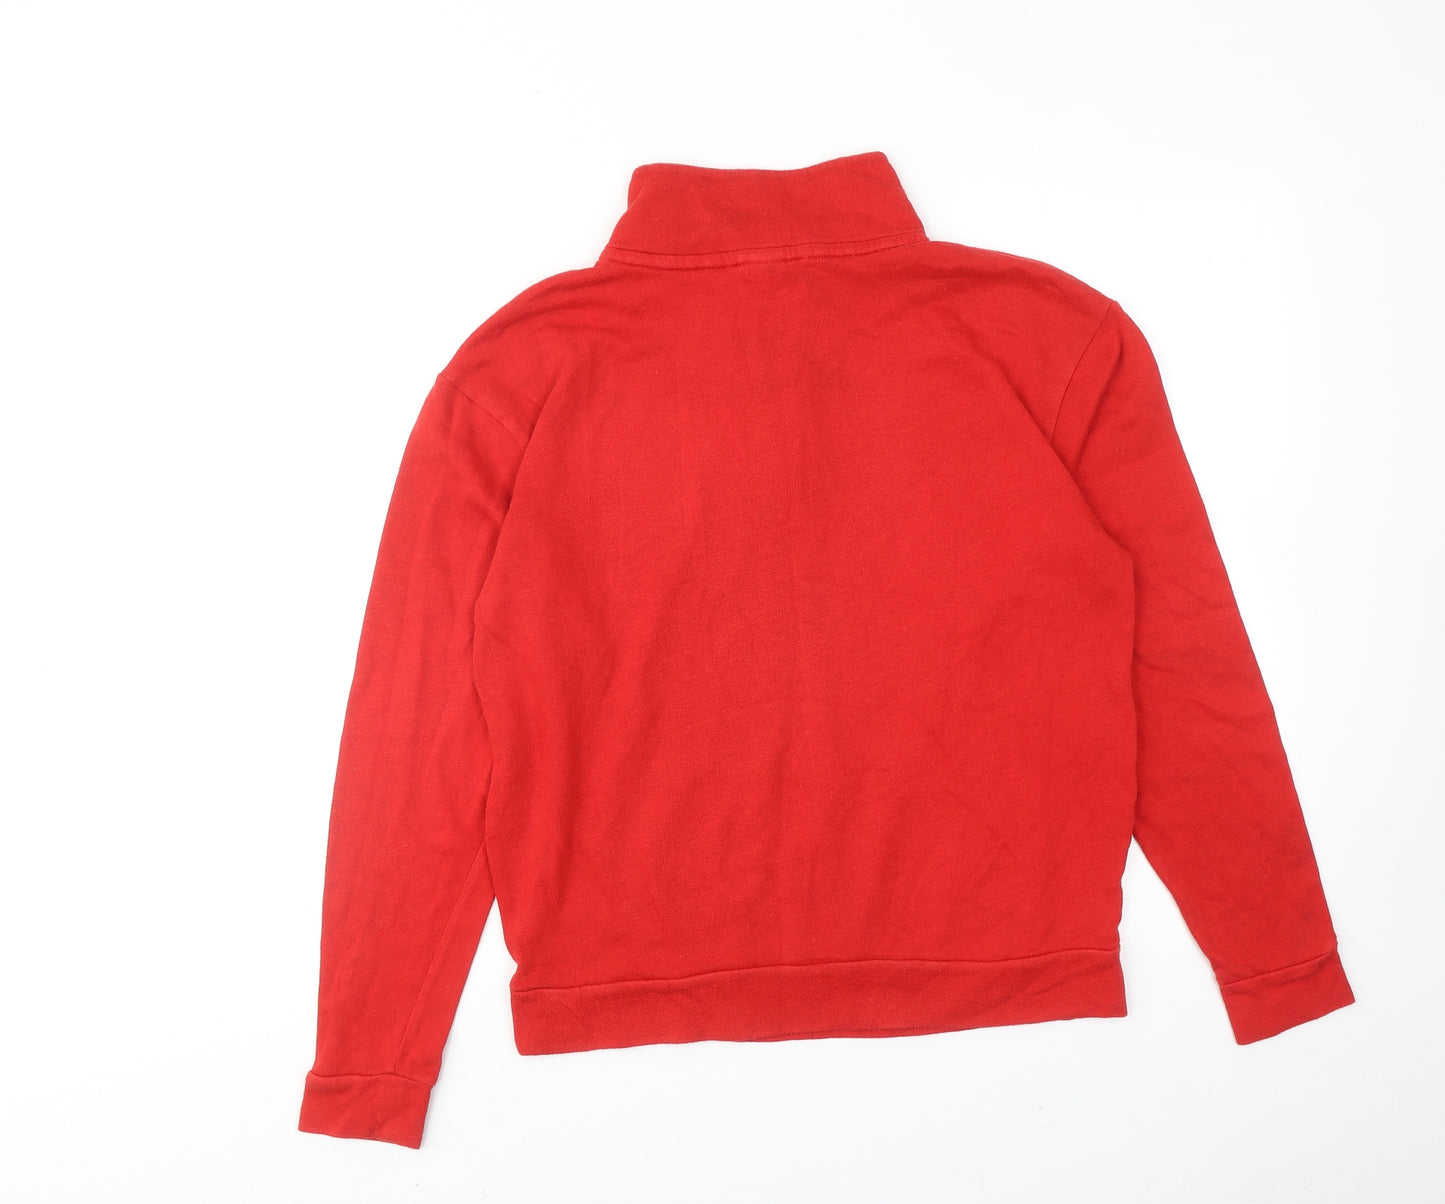 PINK Womens Red Cotton Pullover Sweatshirt Size XS Zip